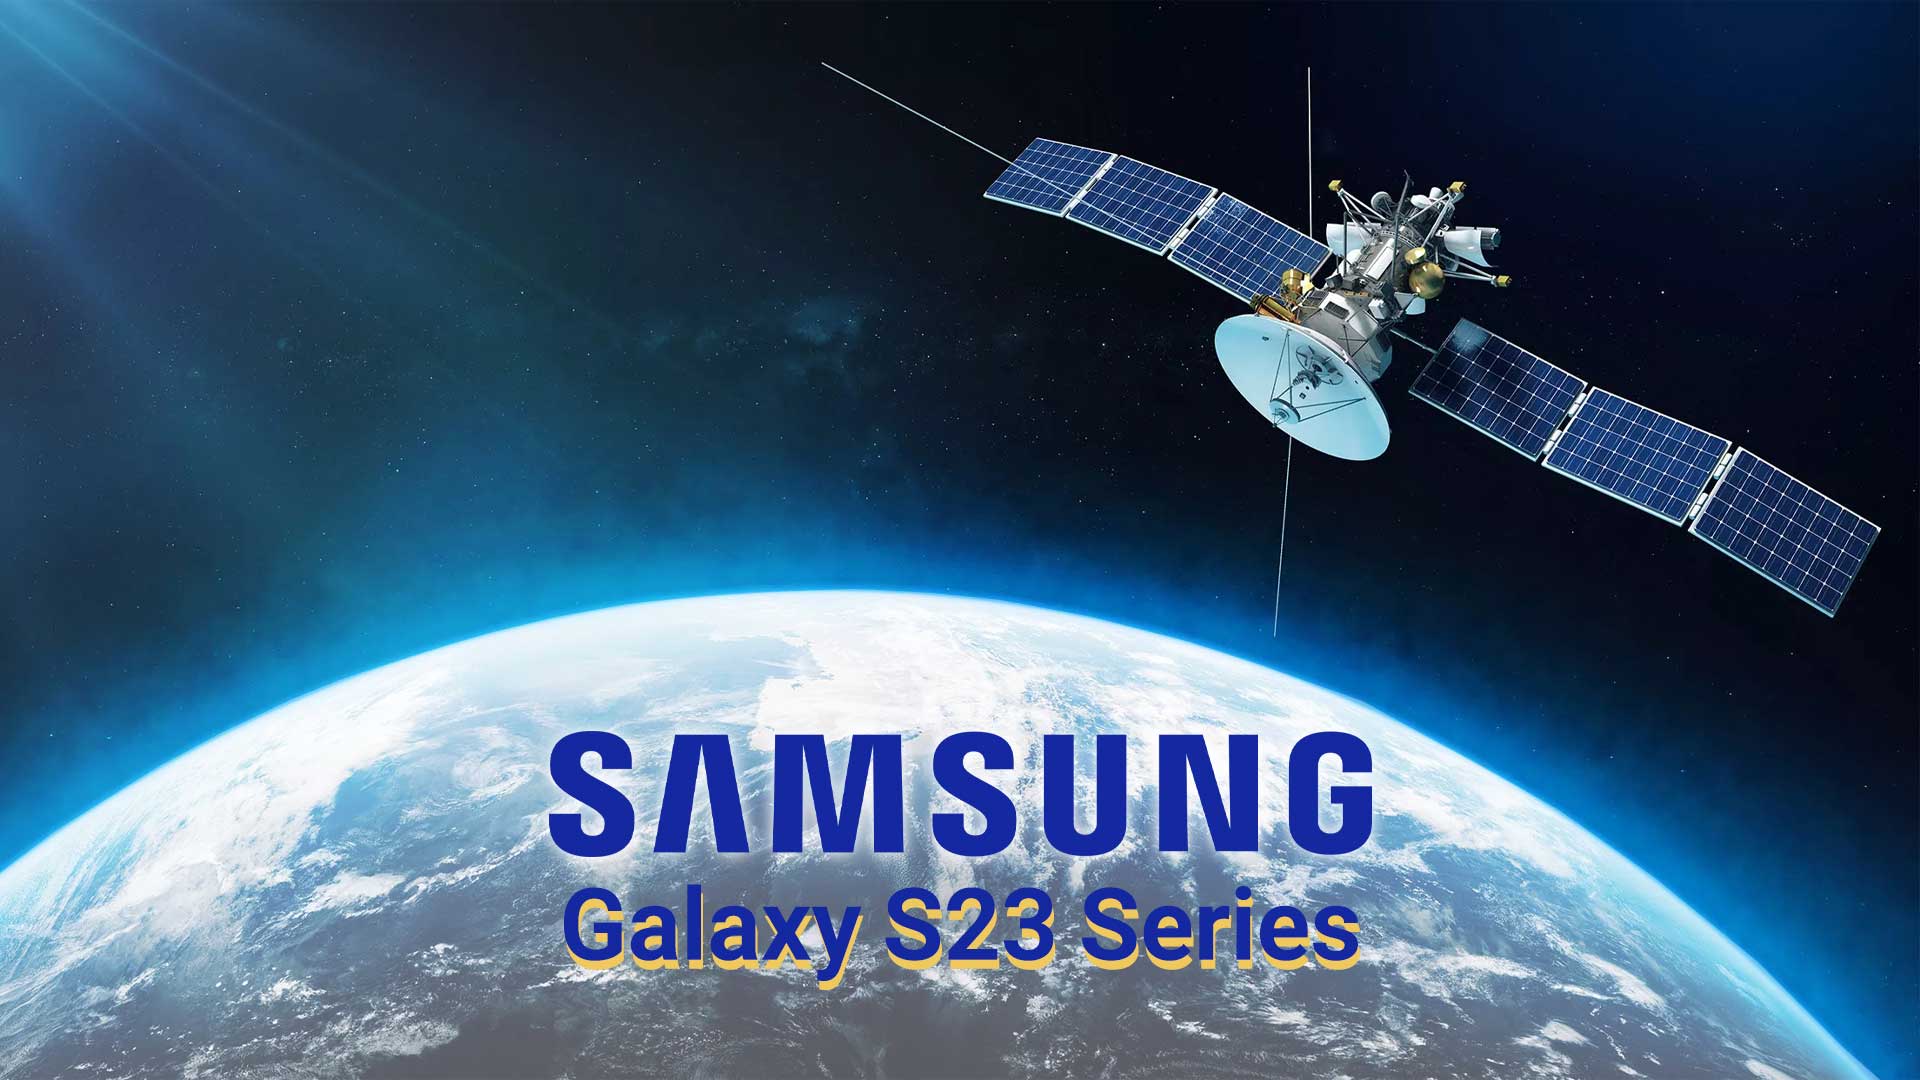 samsung-galaxy-s23-series-satellite-communication